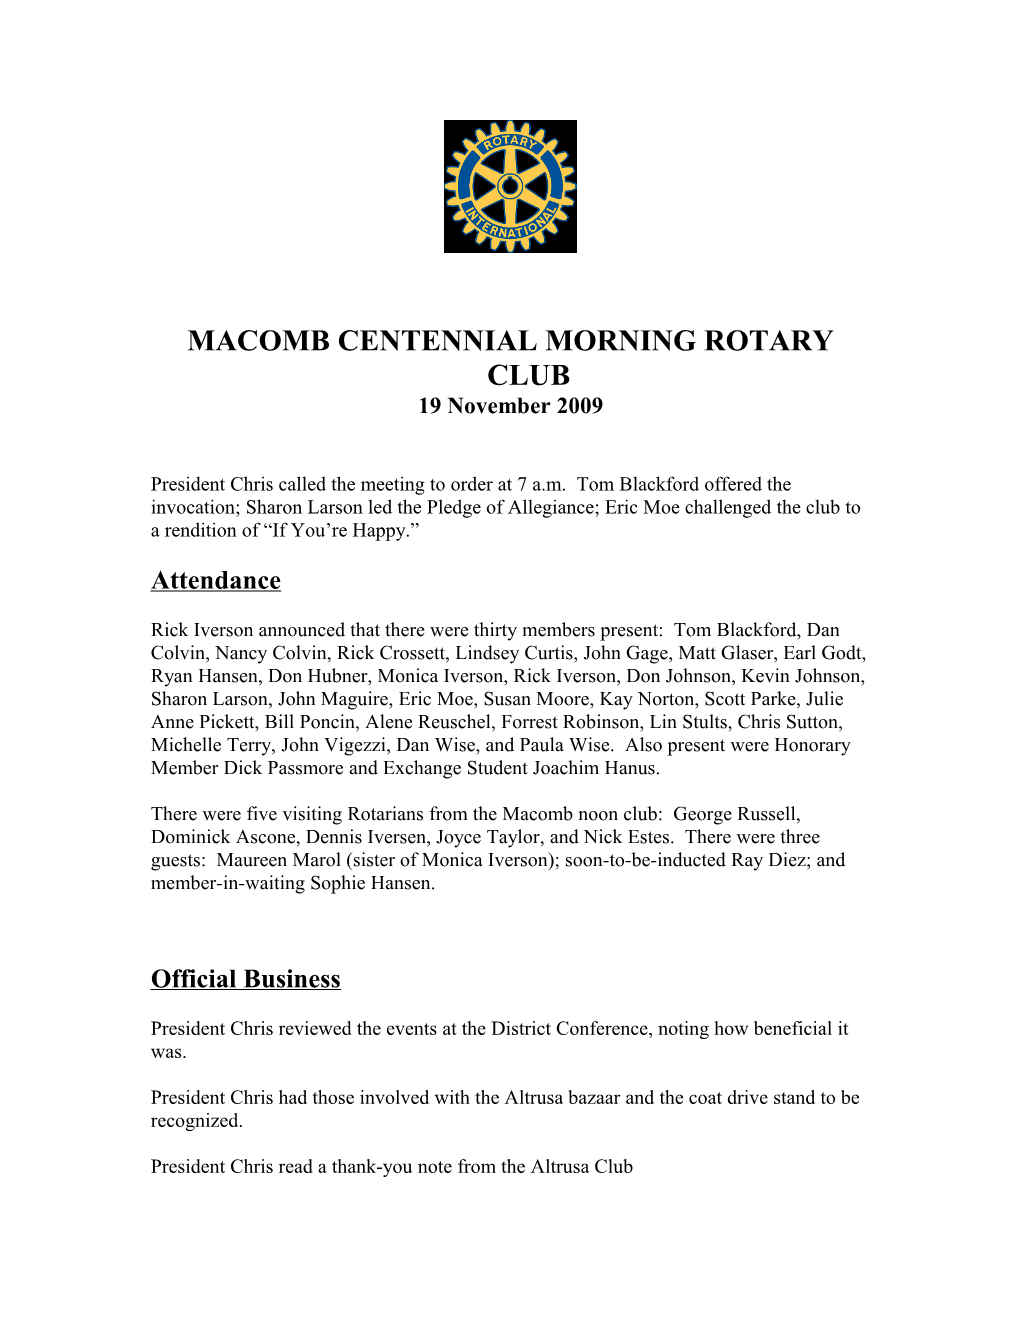 Macomb Centennial Morning Rotary Club